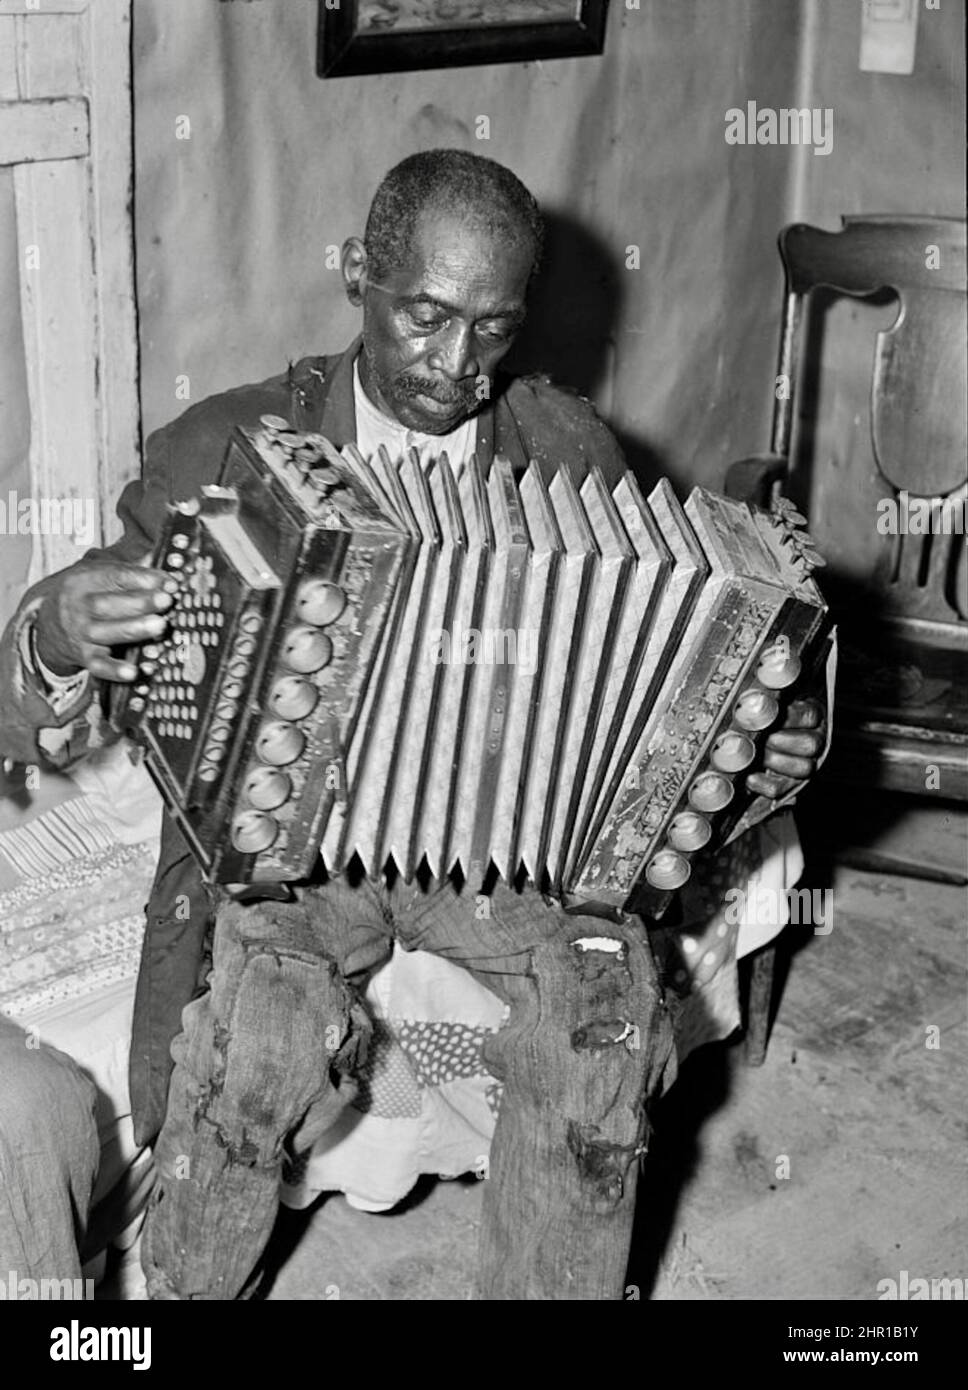 John Vachon - John Dyson born into slavery - playing the accordion Stock Photo